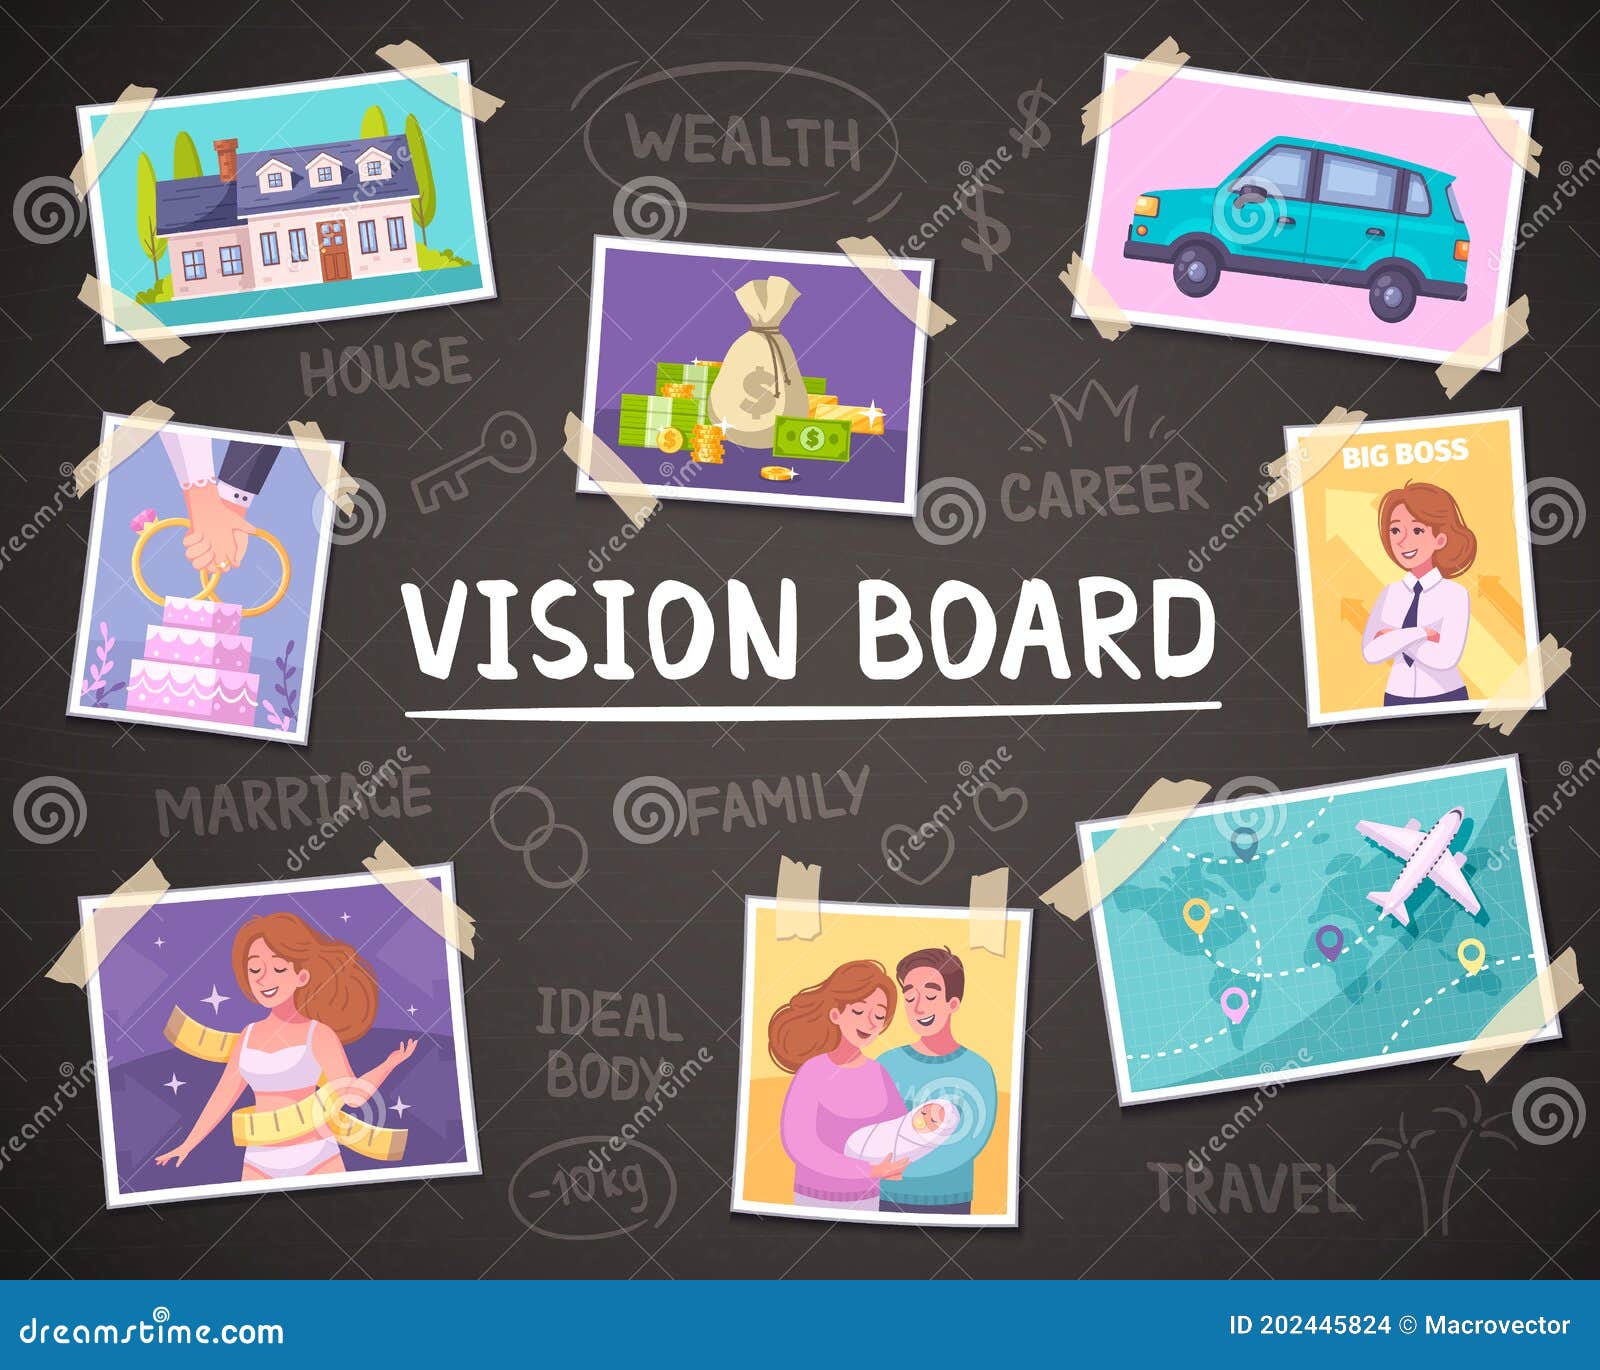 Vision board goals Vectors & Illustrations for Free Download